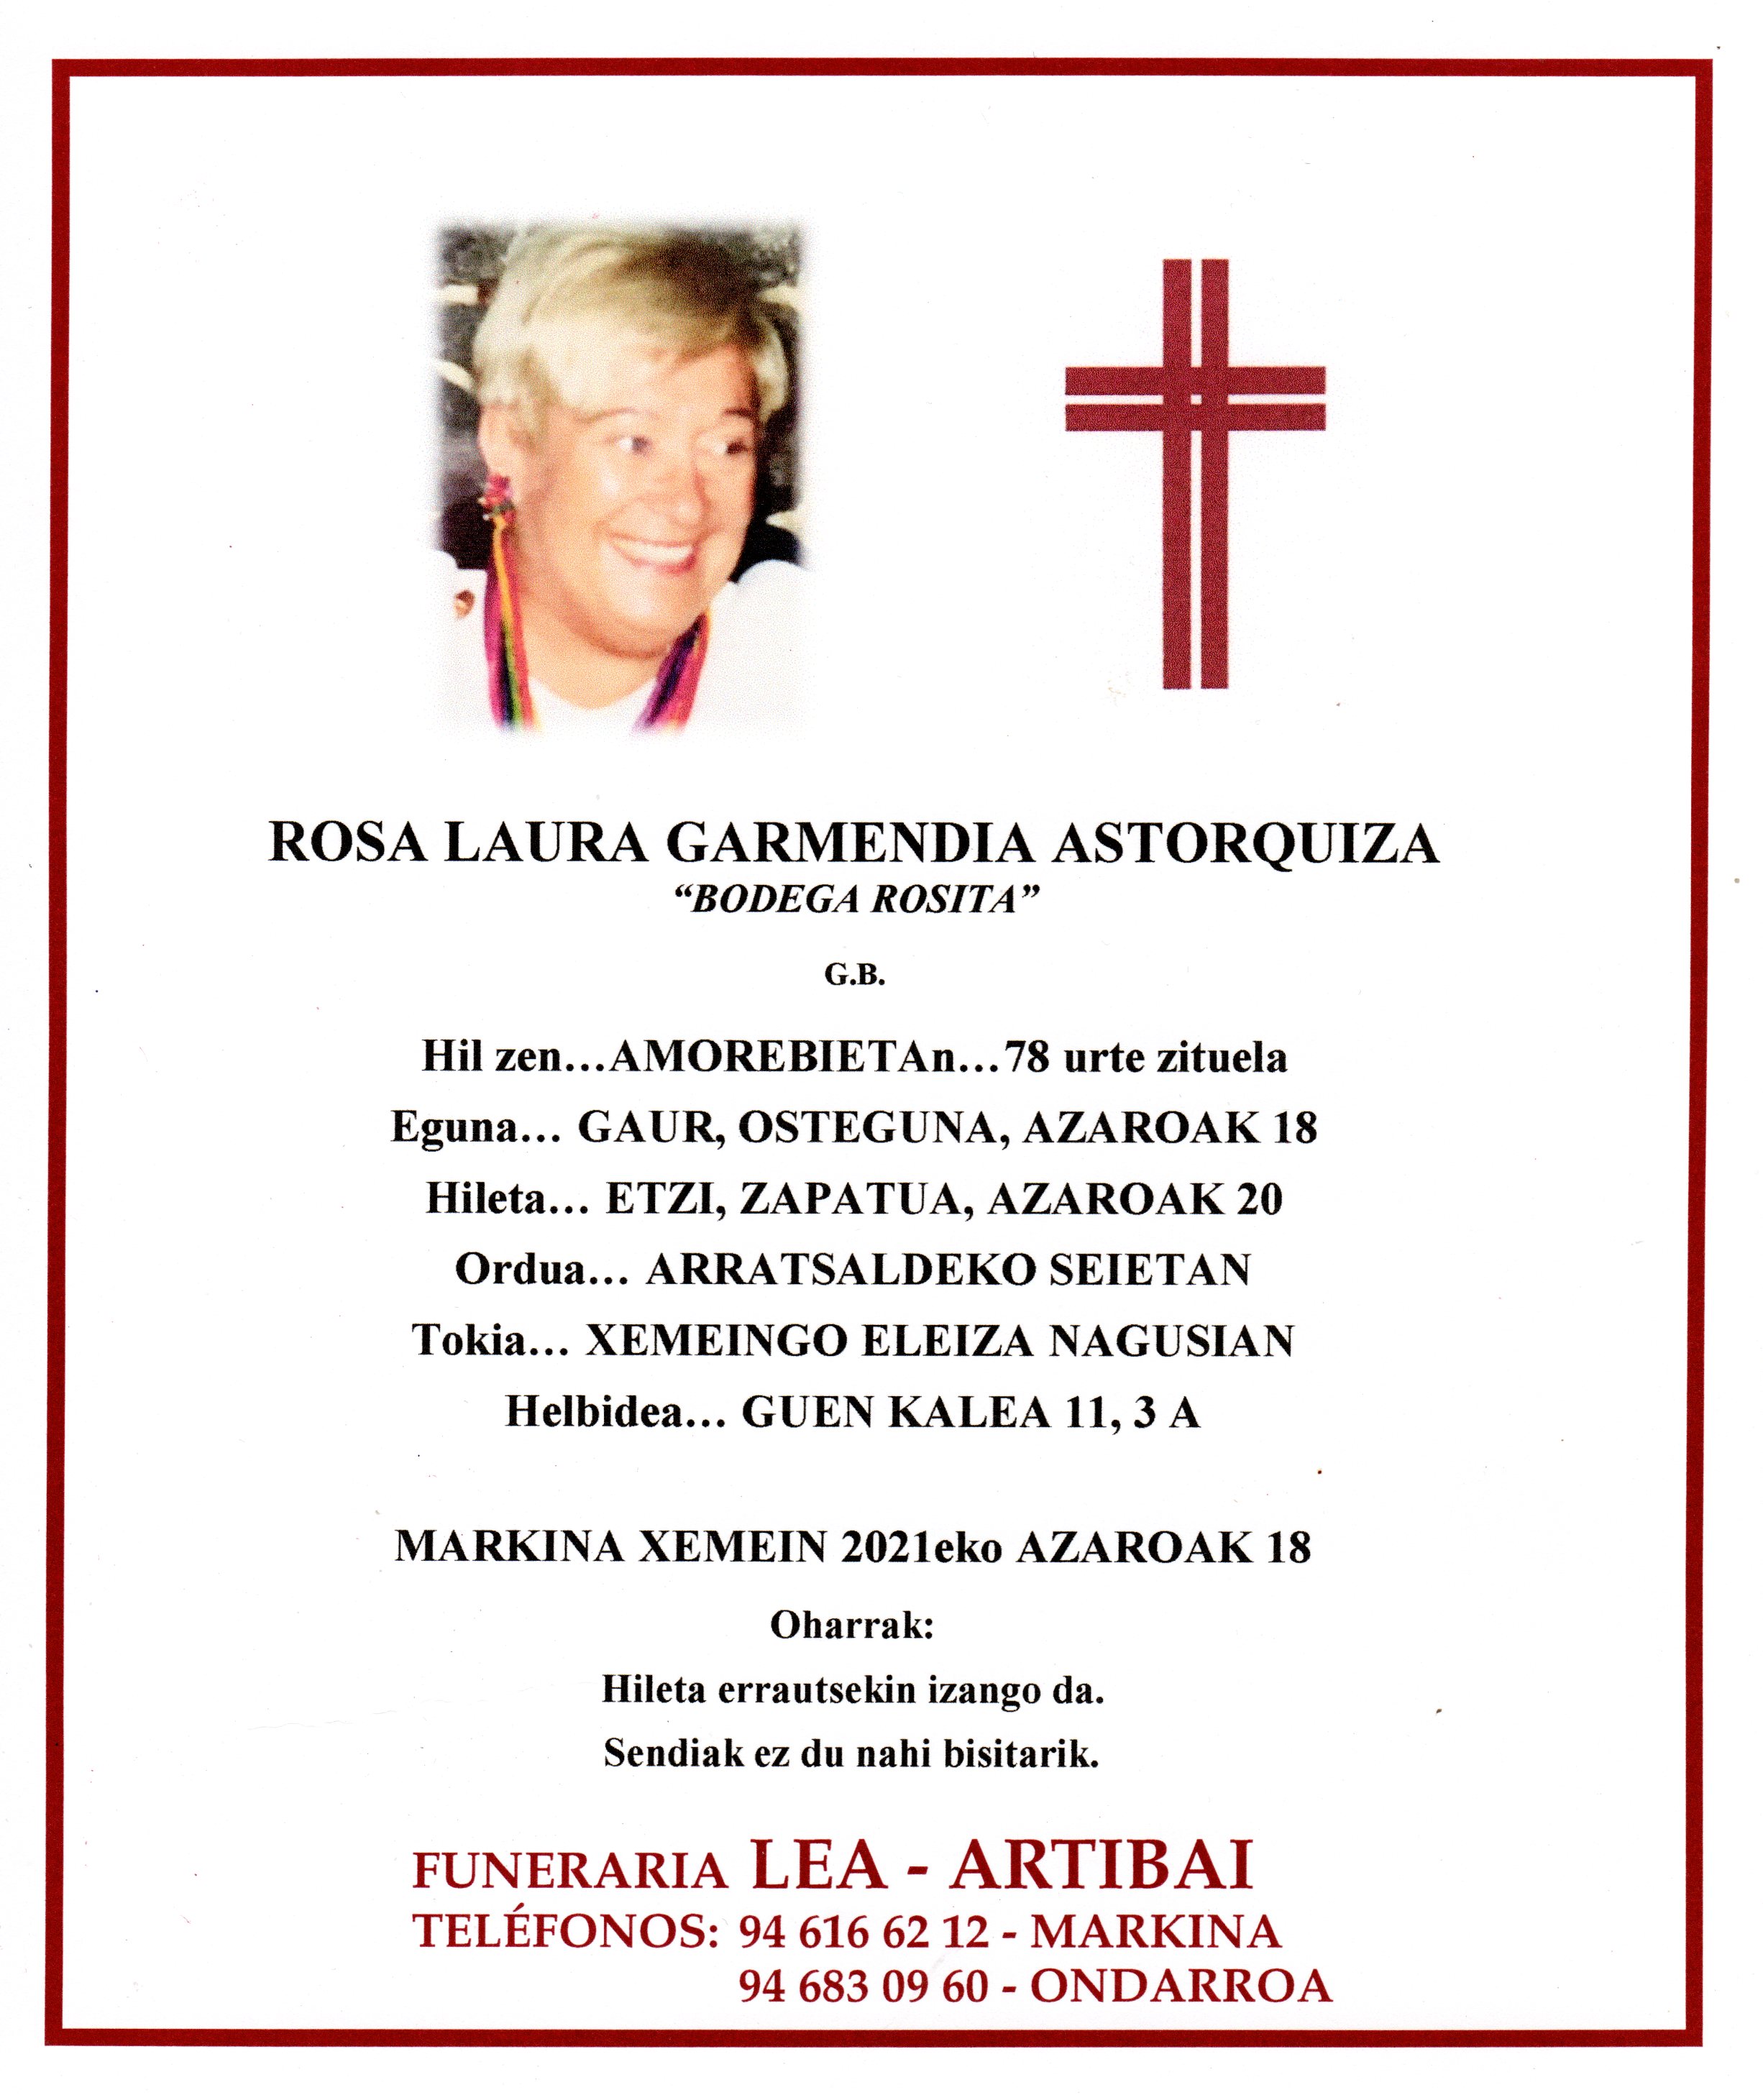 Rosa Laura Garmendia Astorquiza